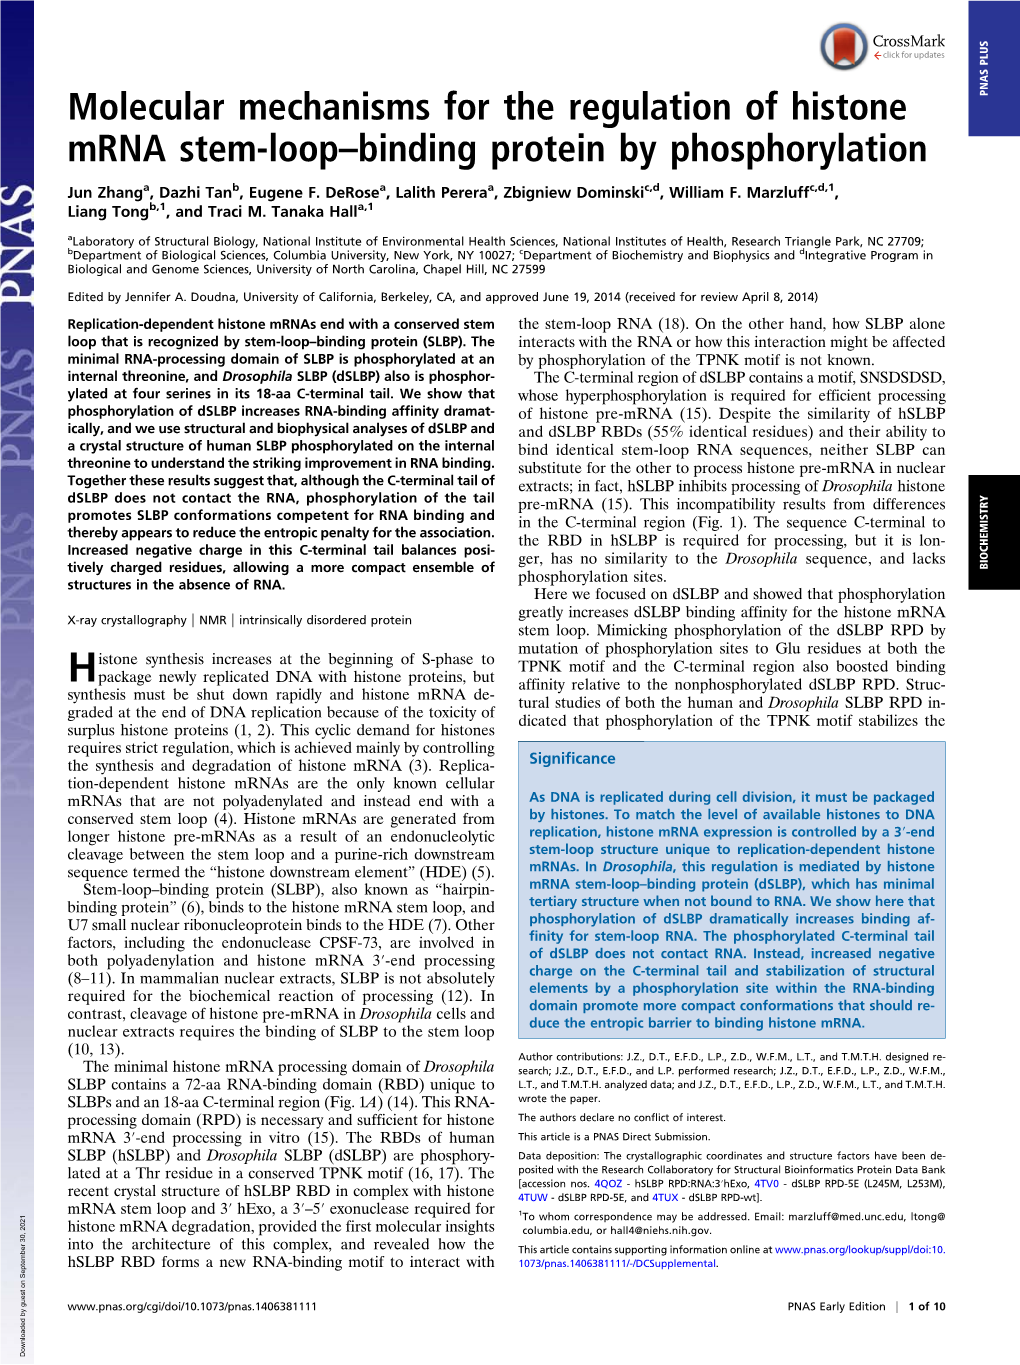 Molecular Mechanisms for the Regulation of Histone Mrna Stem